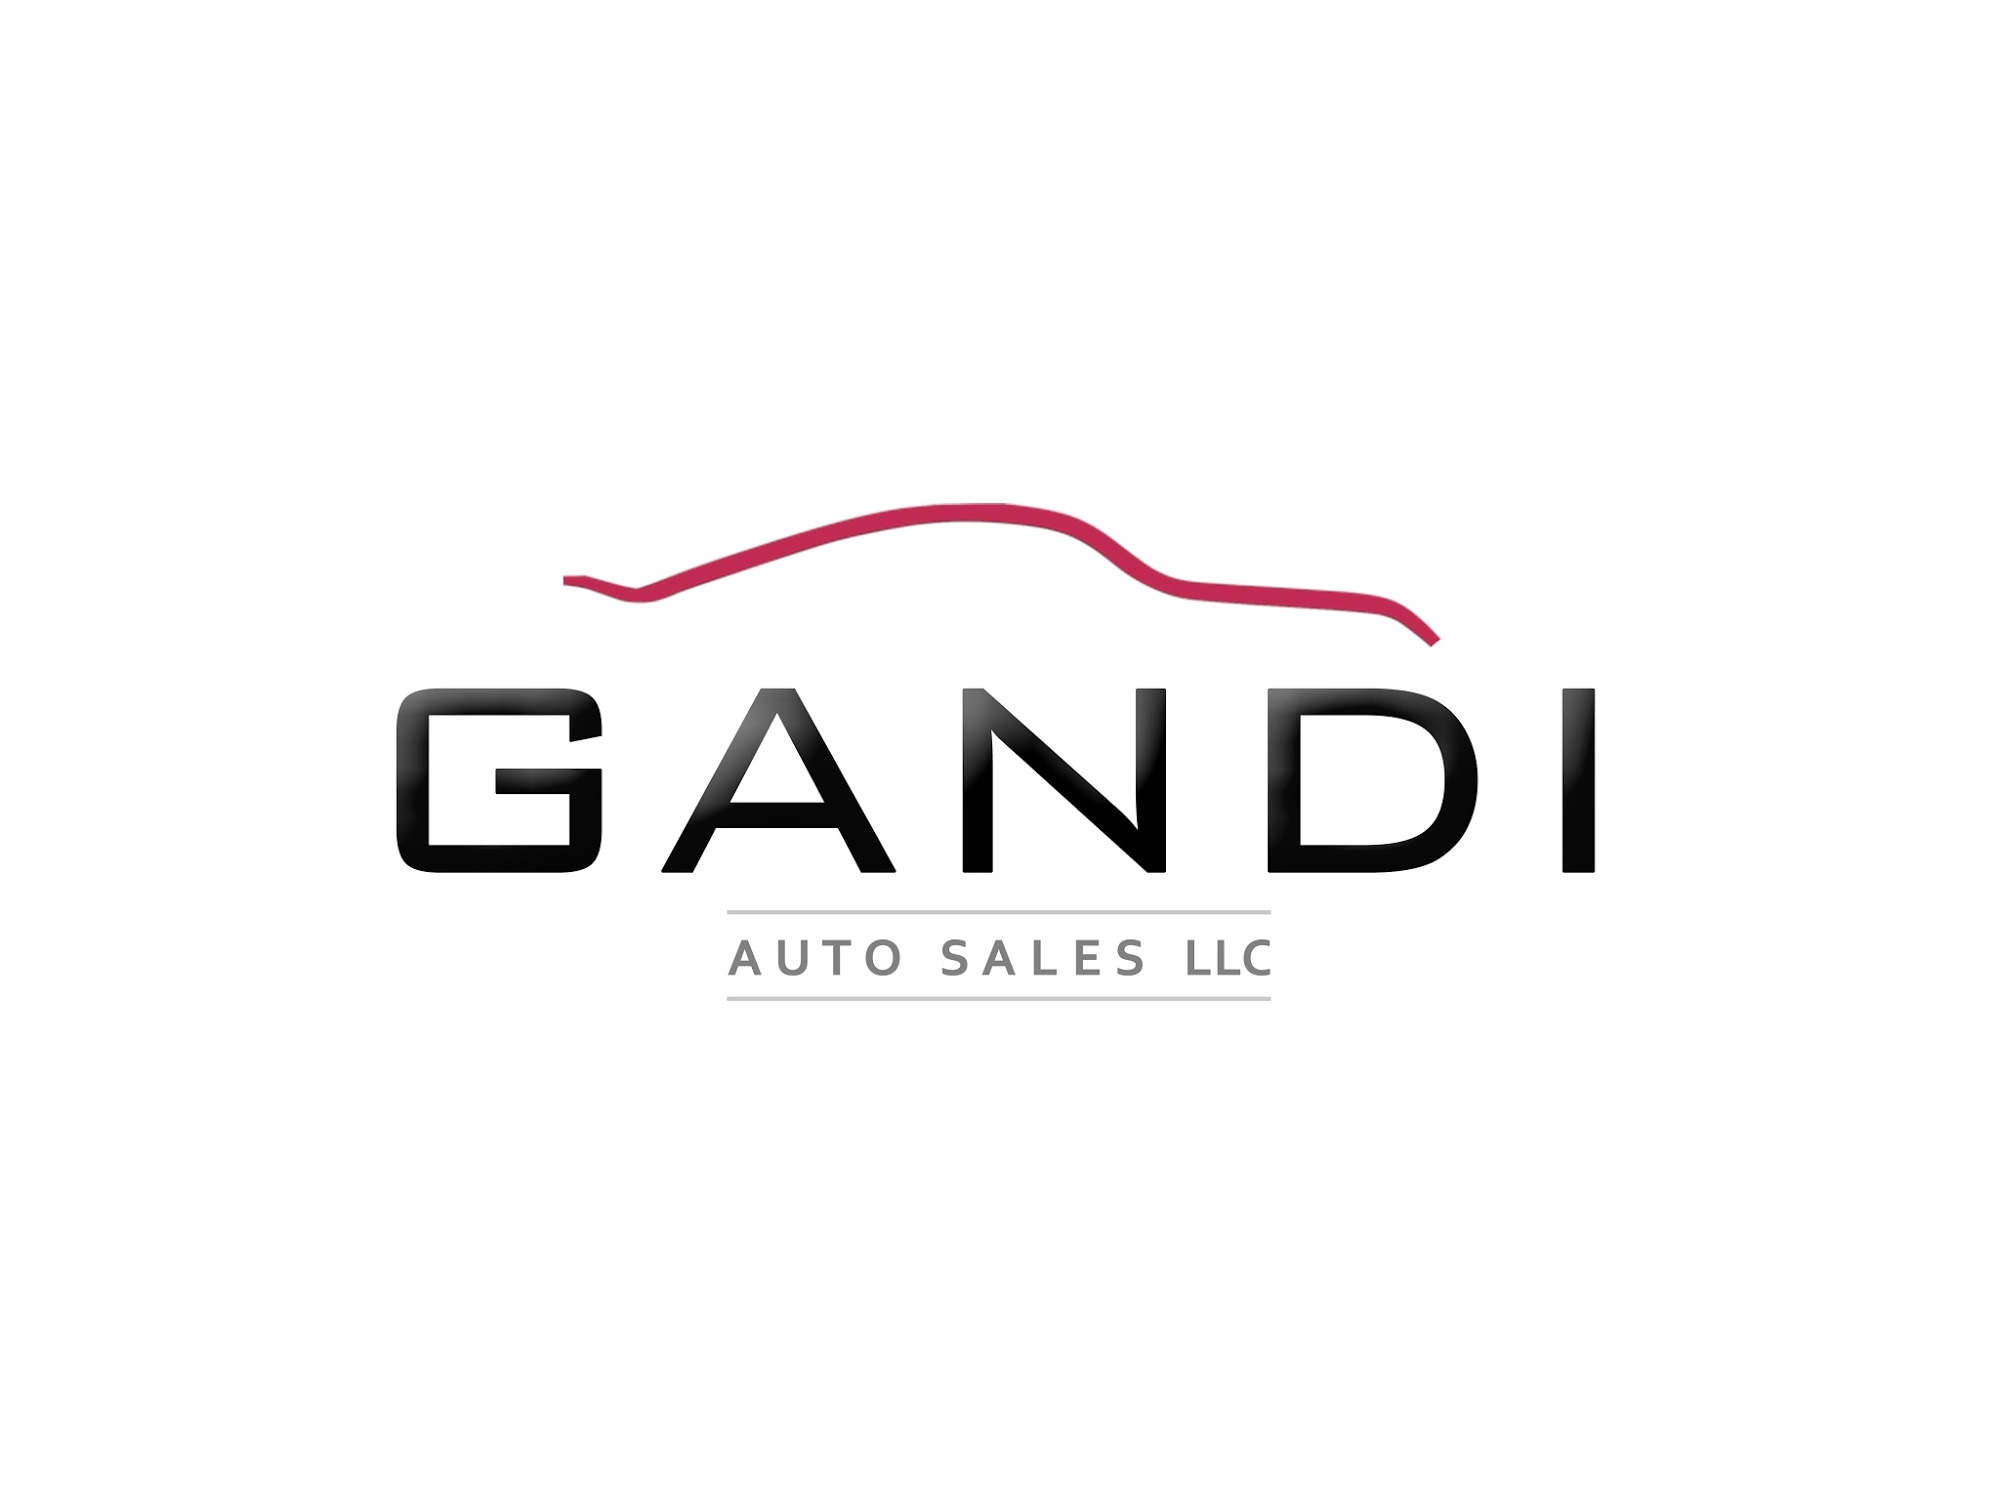 Gandi Auto Sales LLC